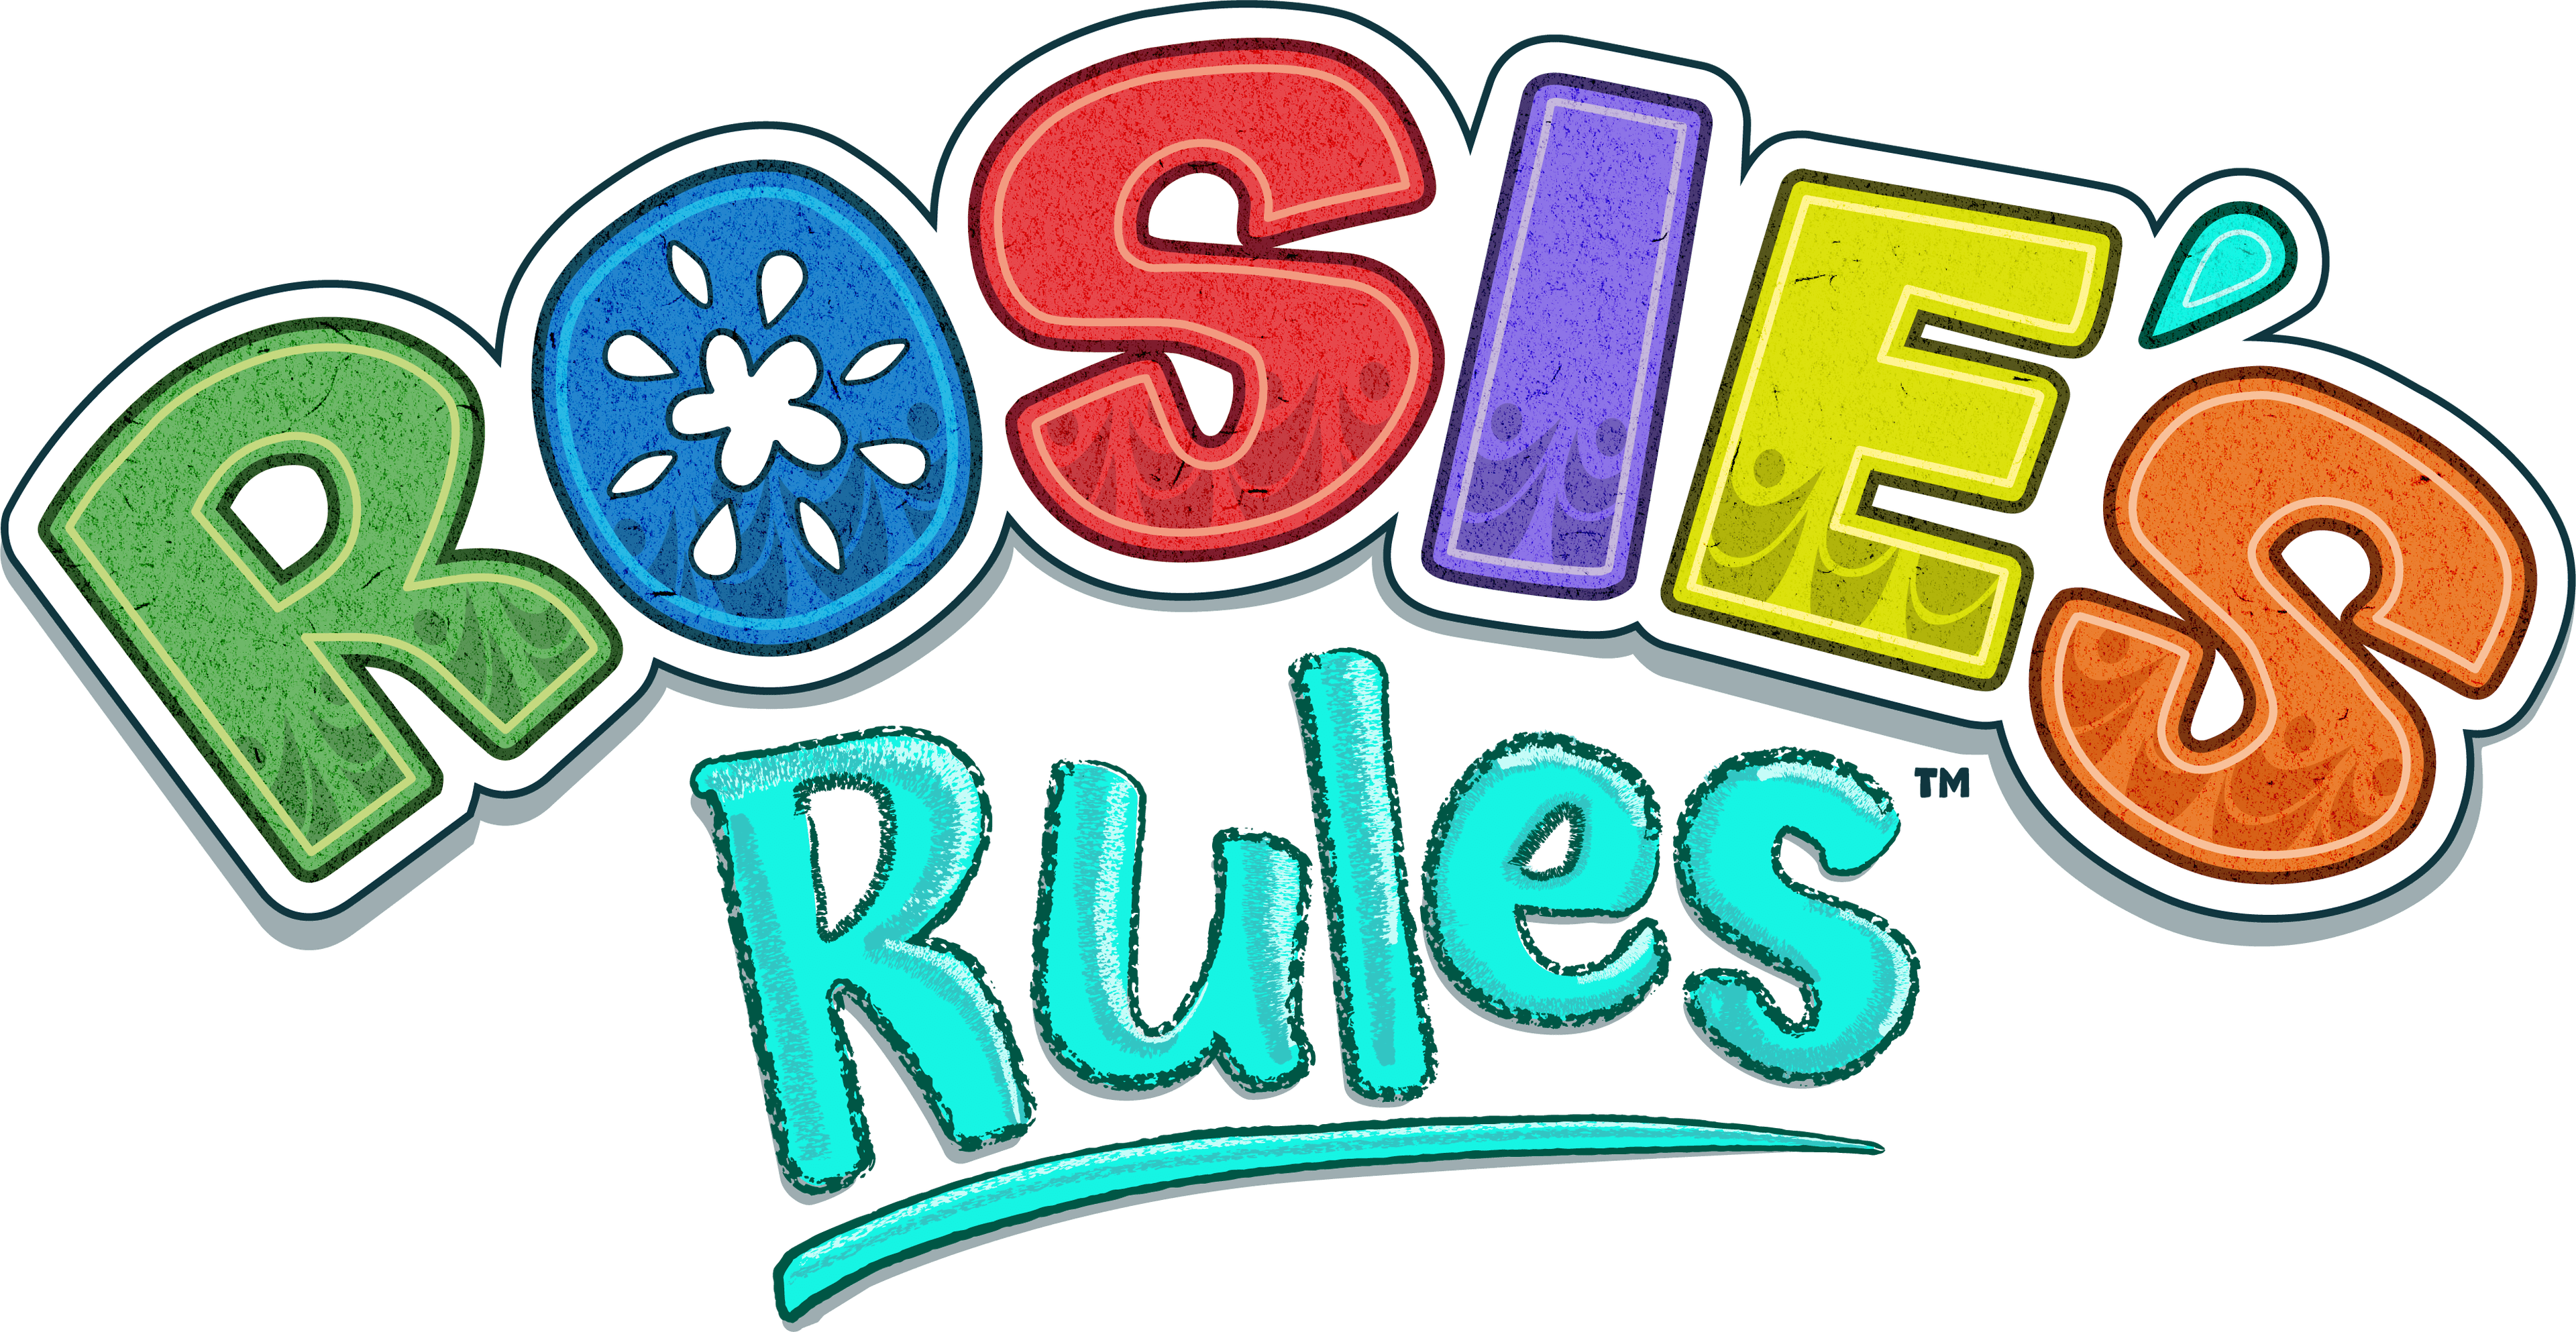 Rosie's Rules logo